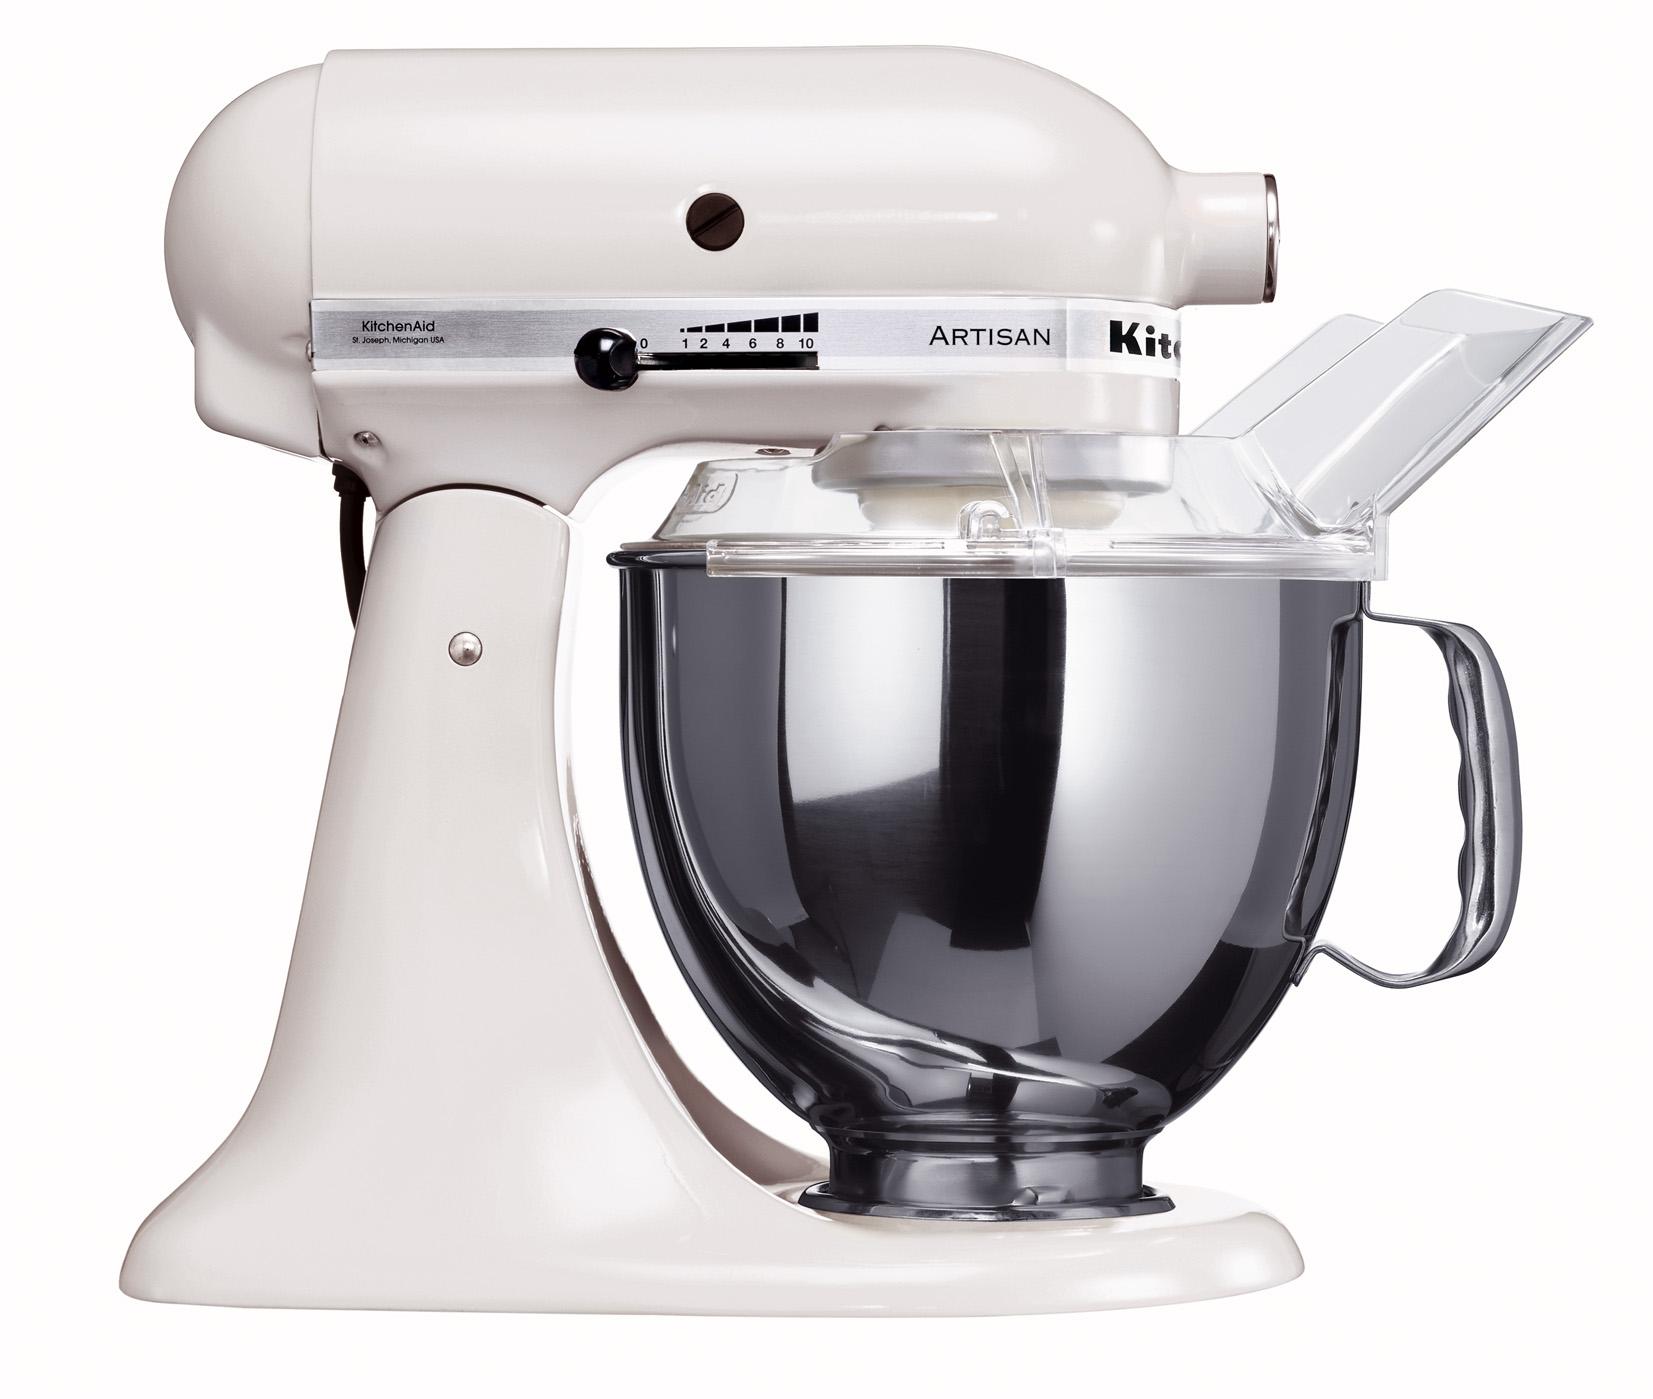 Foto KitchenAid Robot de Cocina Artisan blanco (H.Nr.: 5KSM150PSEWH)